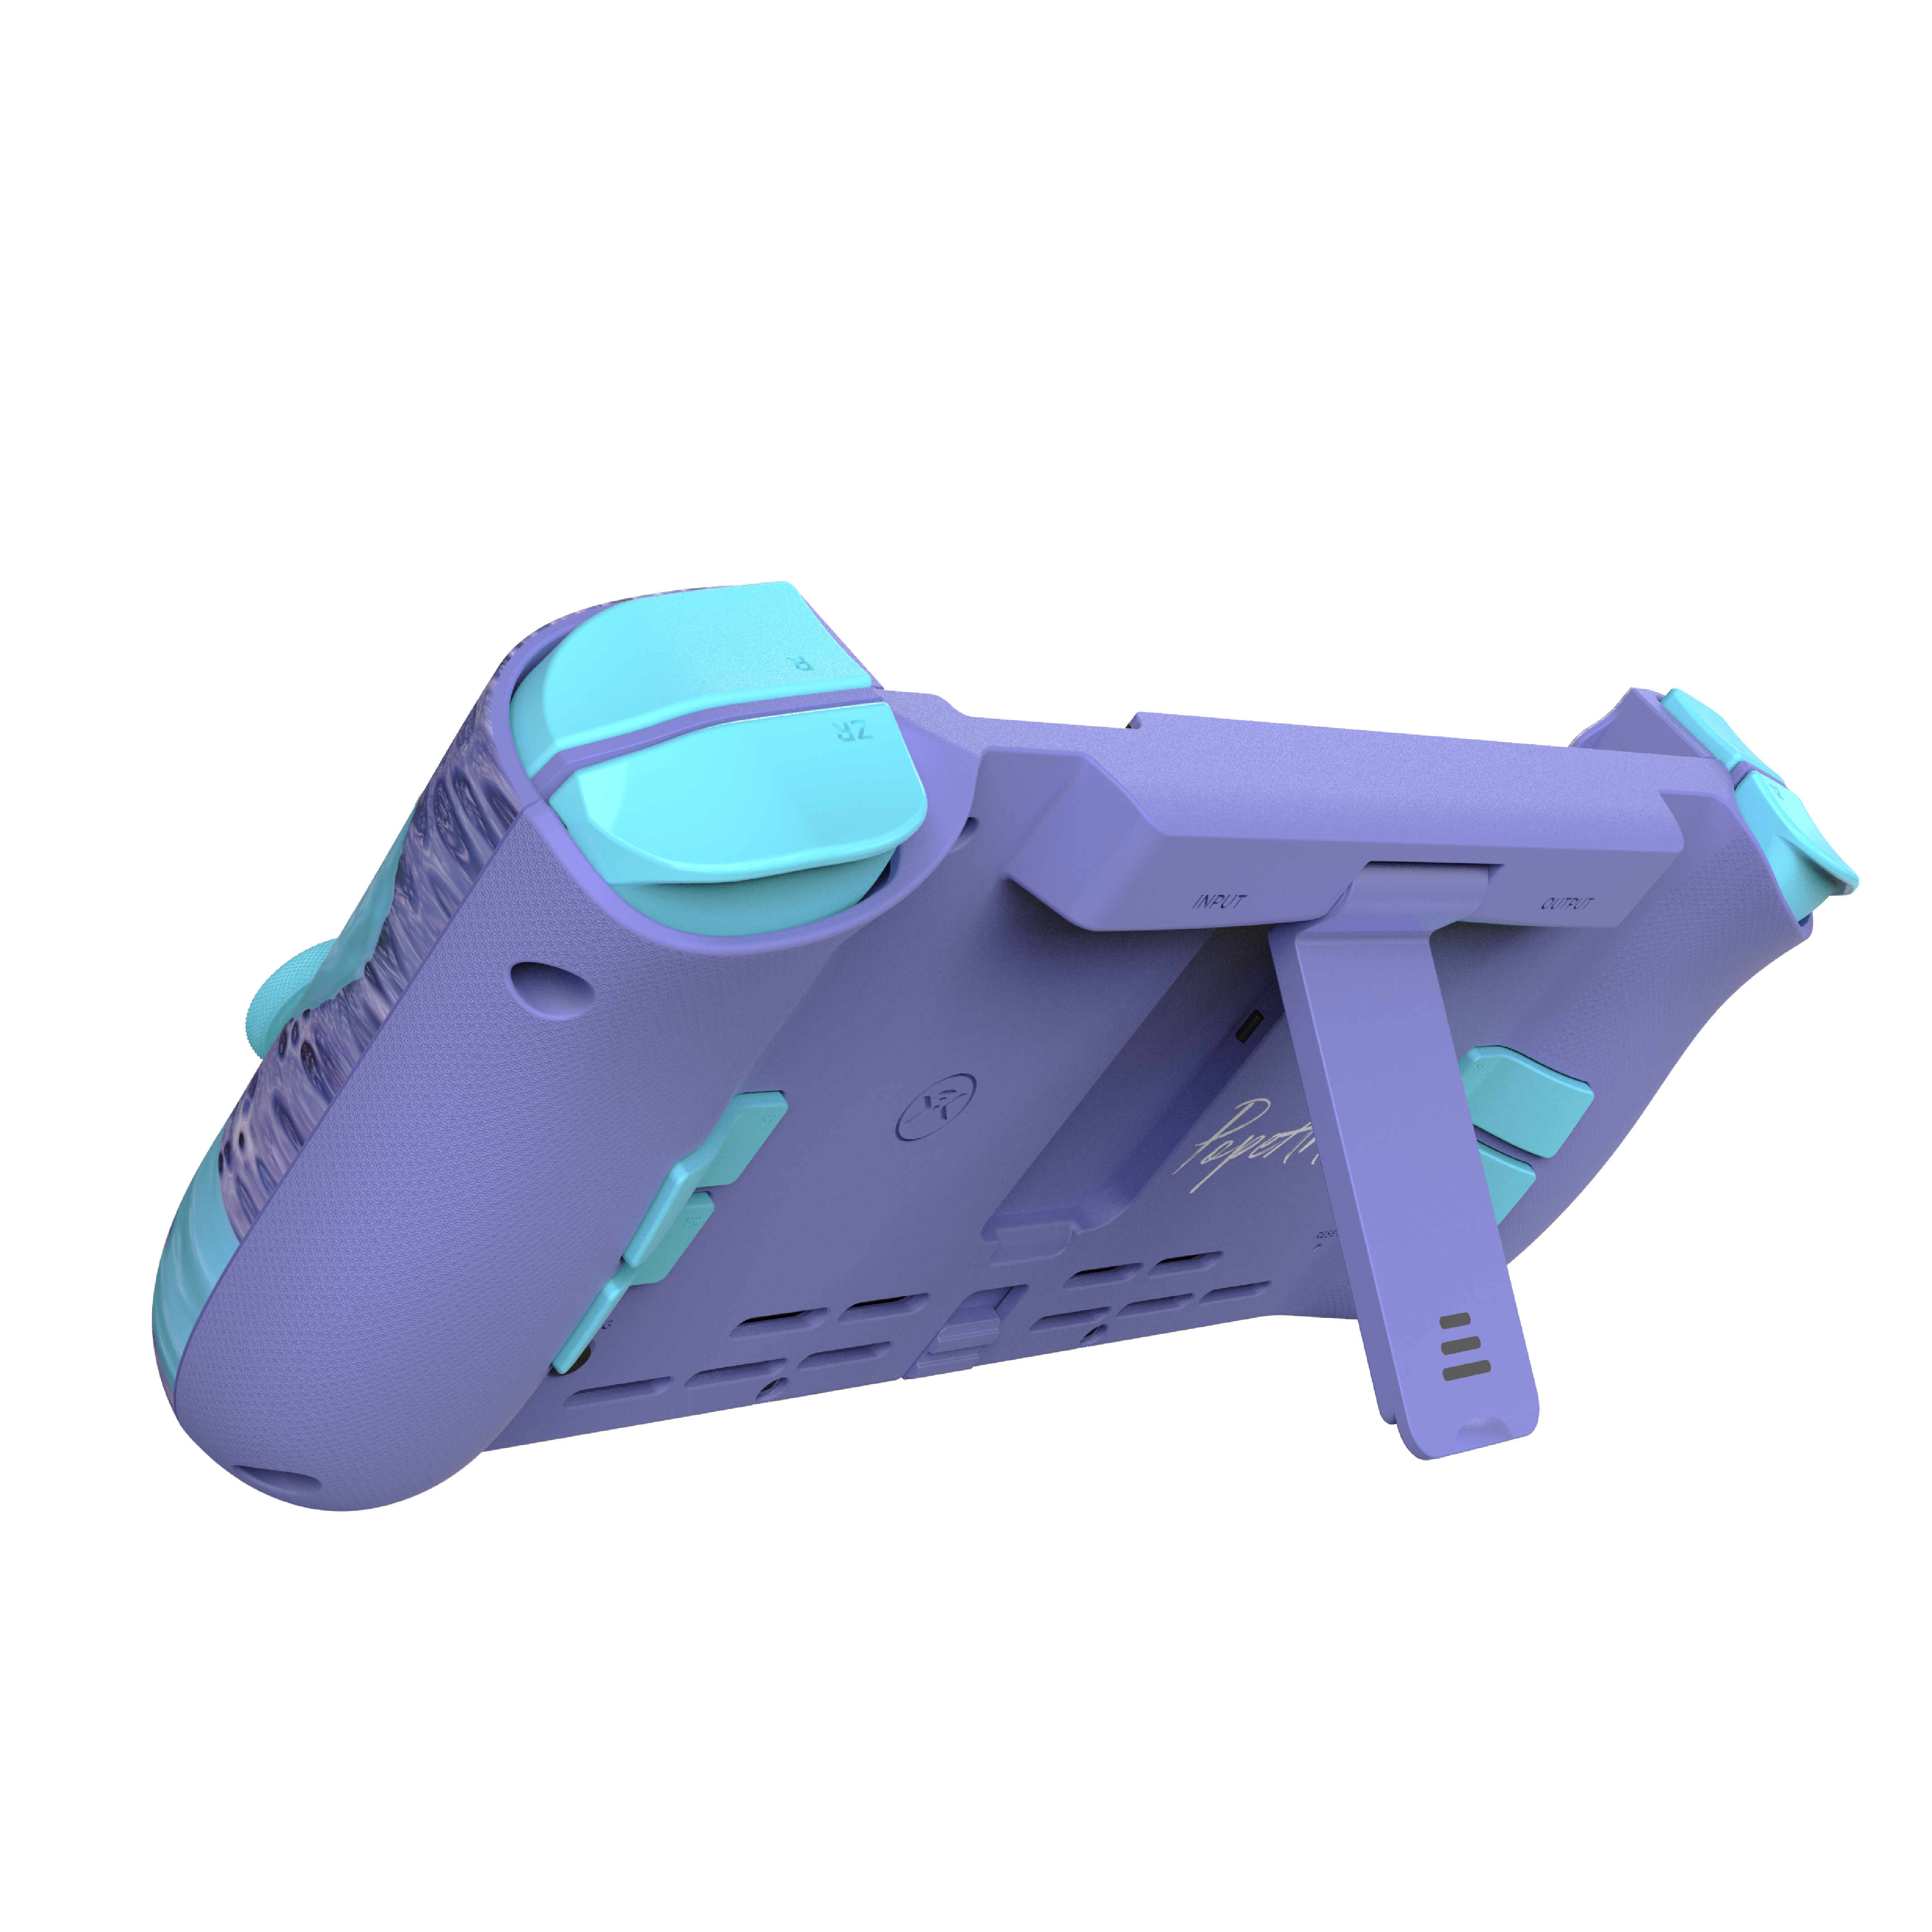 Nitro Deck Kraken Special Edition designed by POPeART